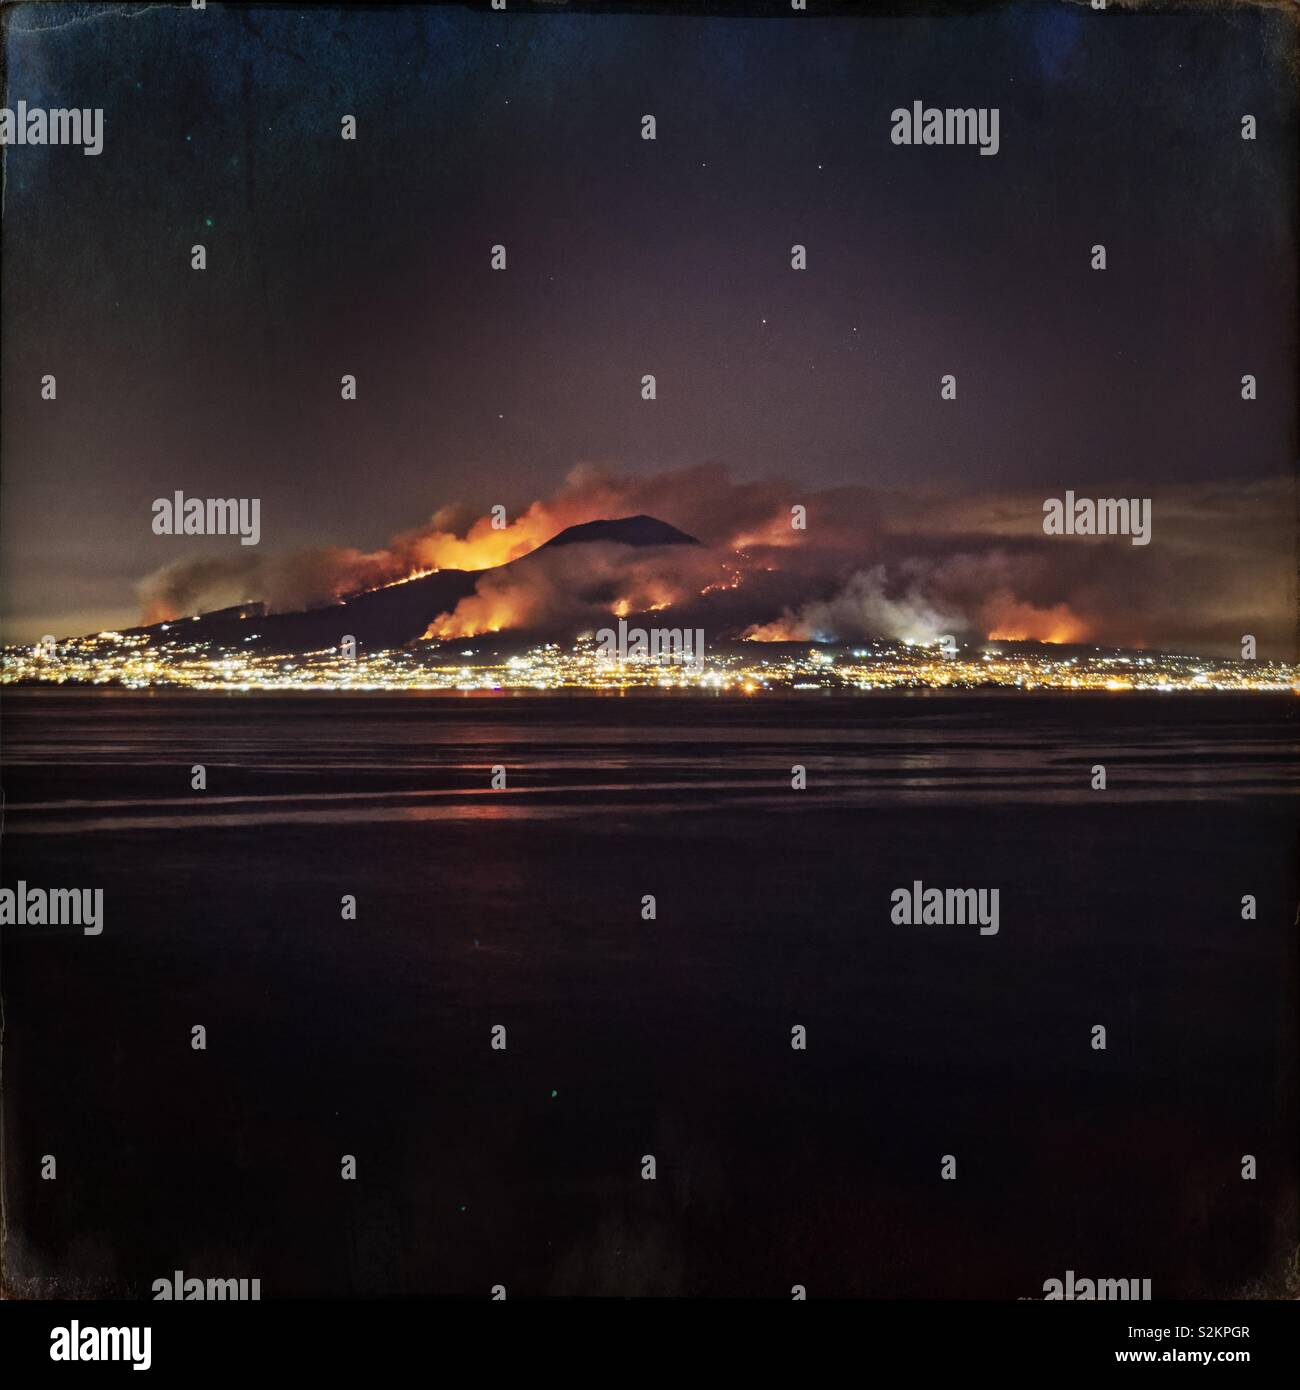 Night image of wild fires burning on Mount Vesuvius volcano, viewed across the Gulf of Naples, Italy Stock Photo